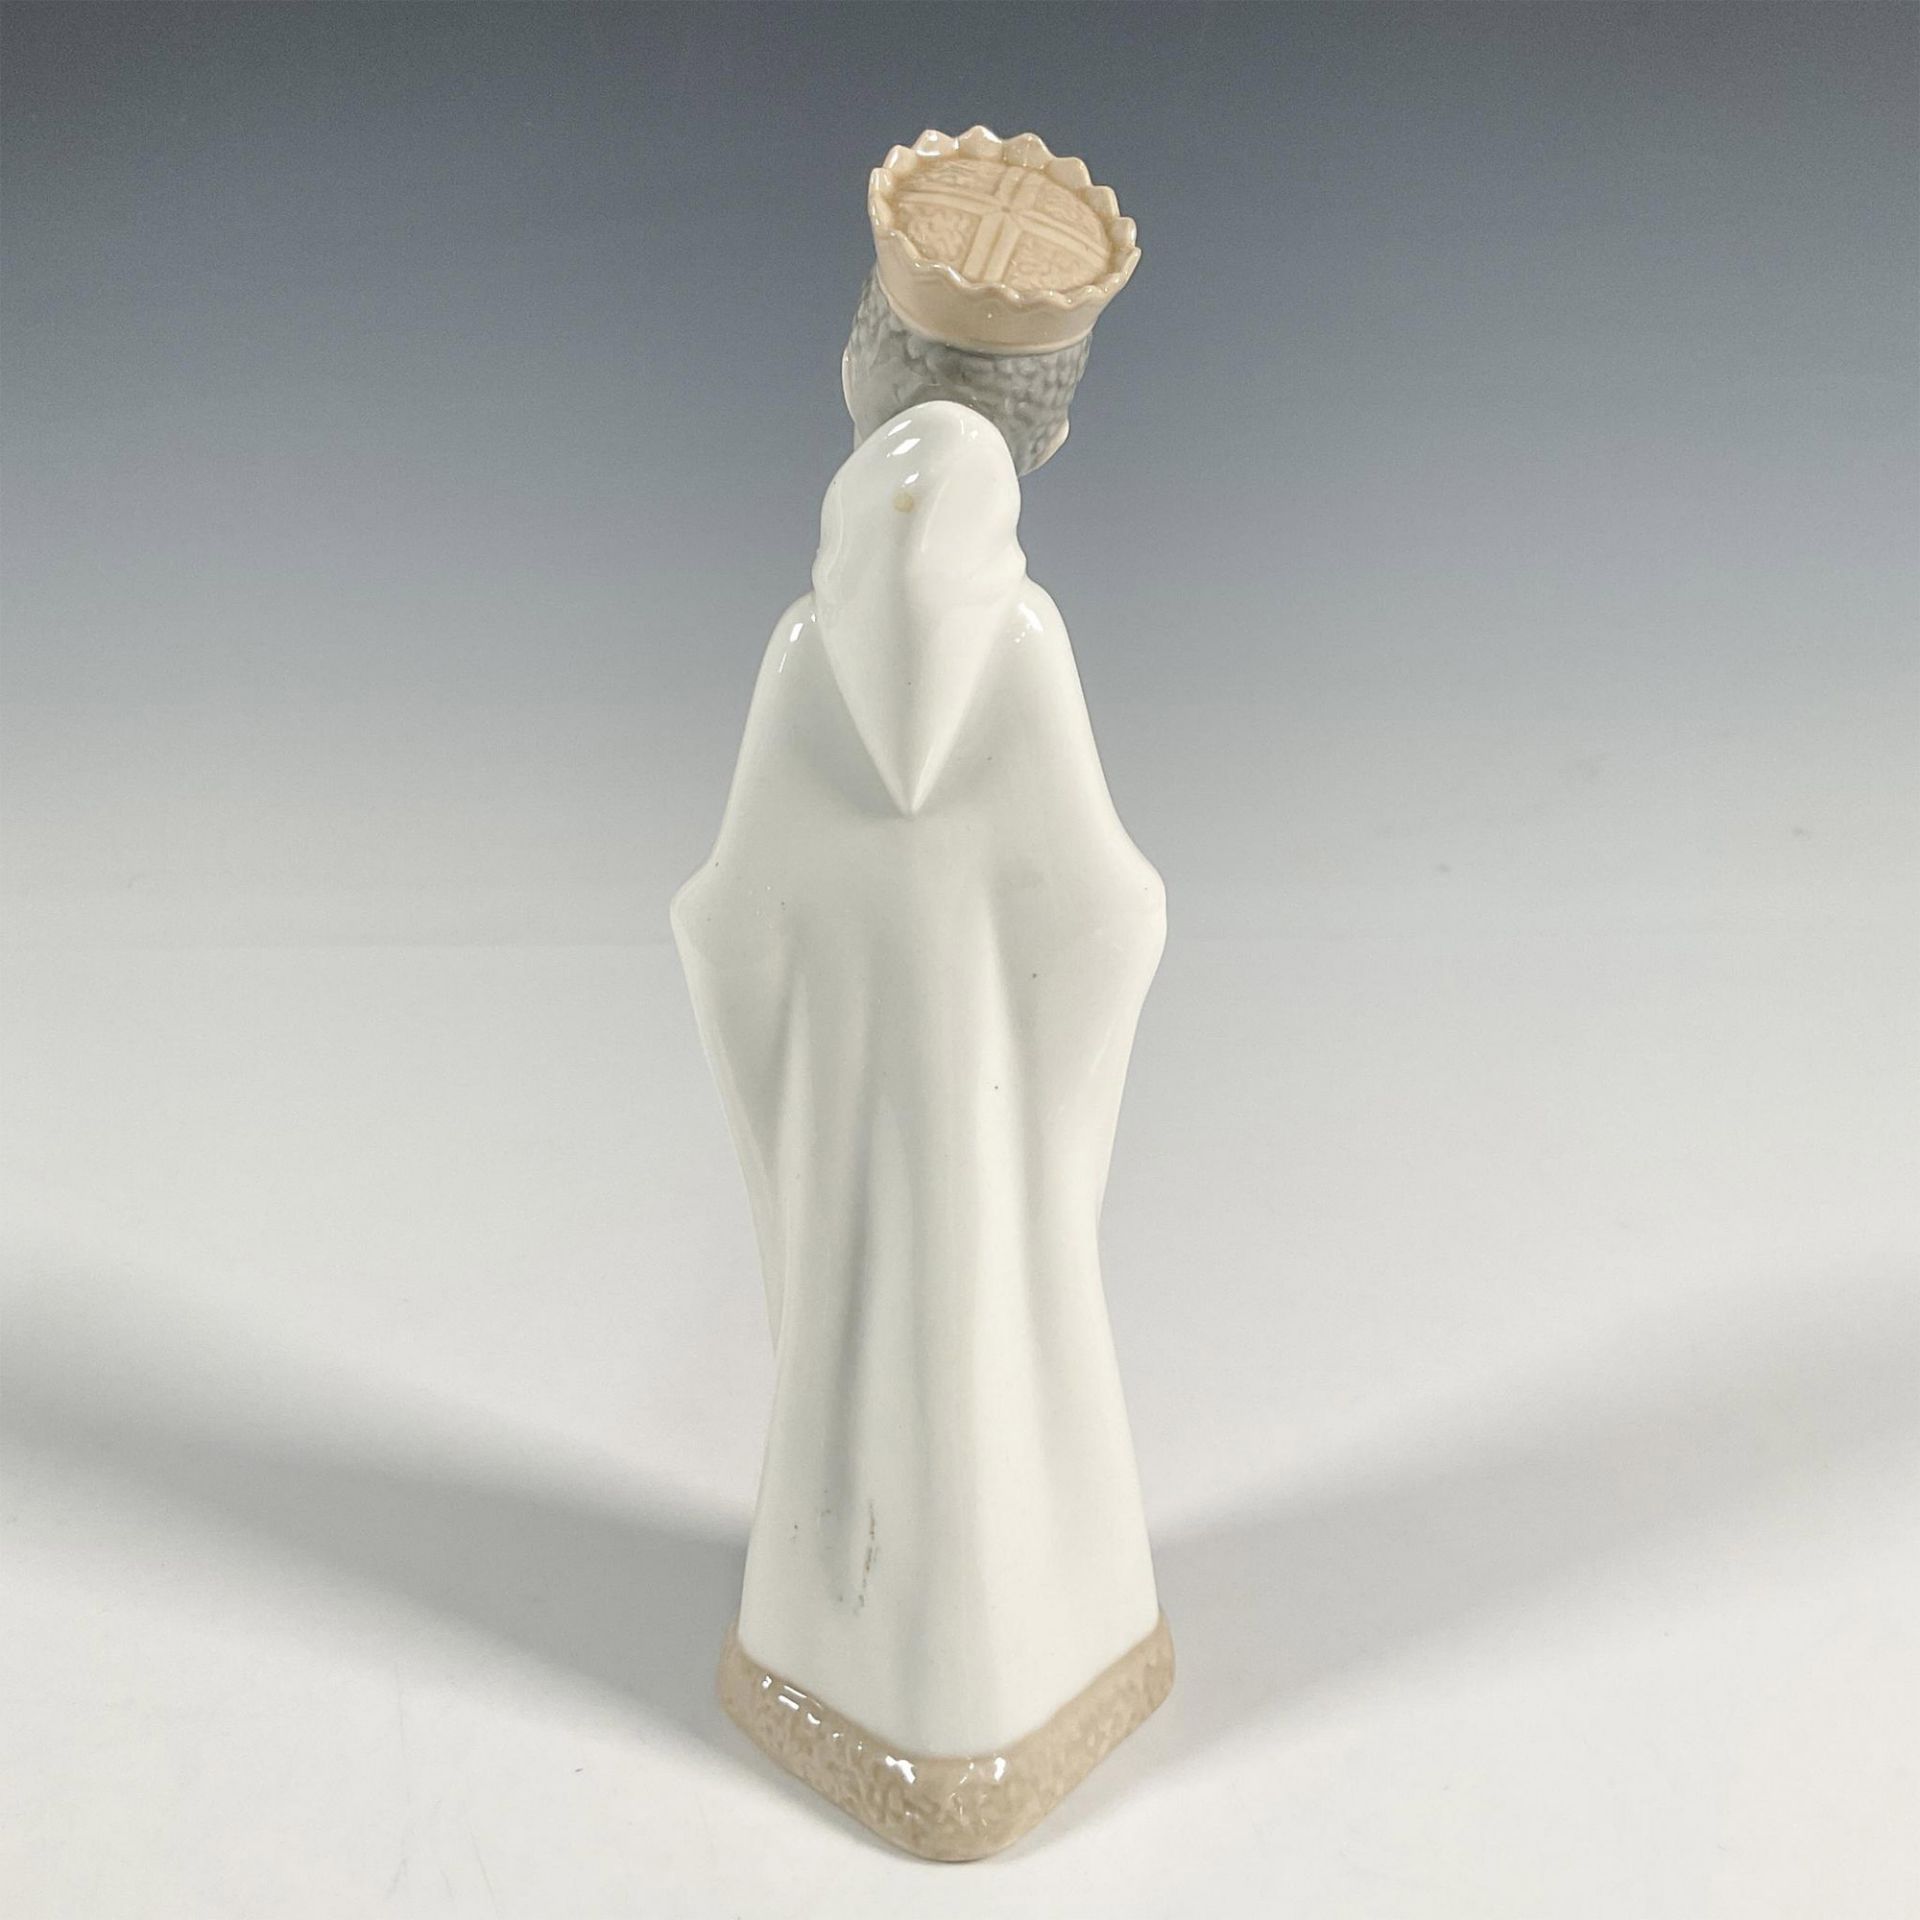 King Balthasar 1004675 - Lladro Porcelain Figurine - Image 2 of 4